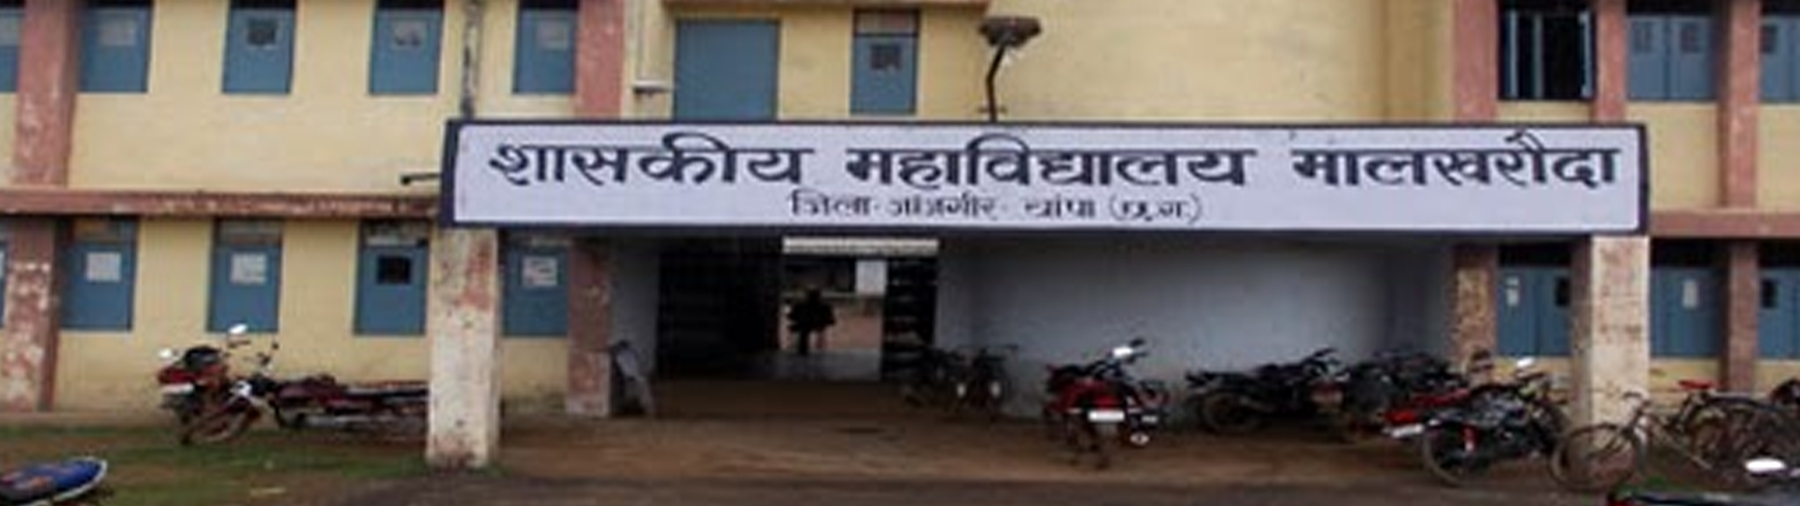 Govt College Malkharoda